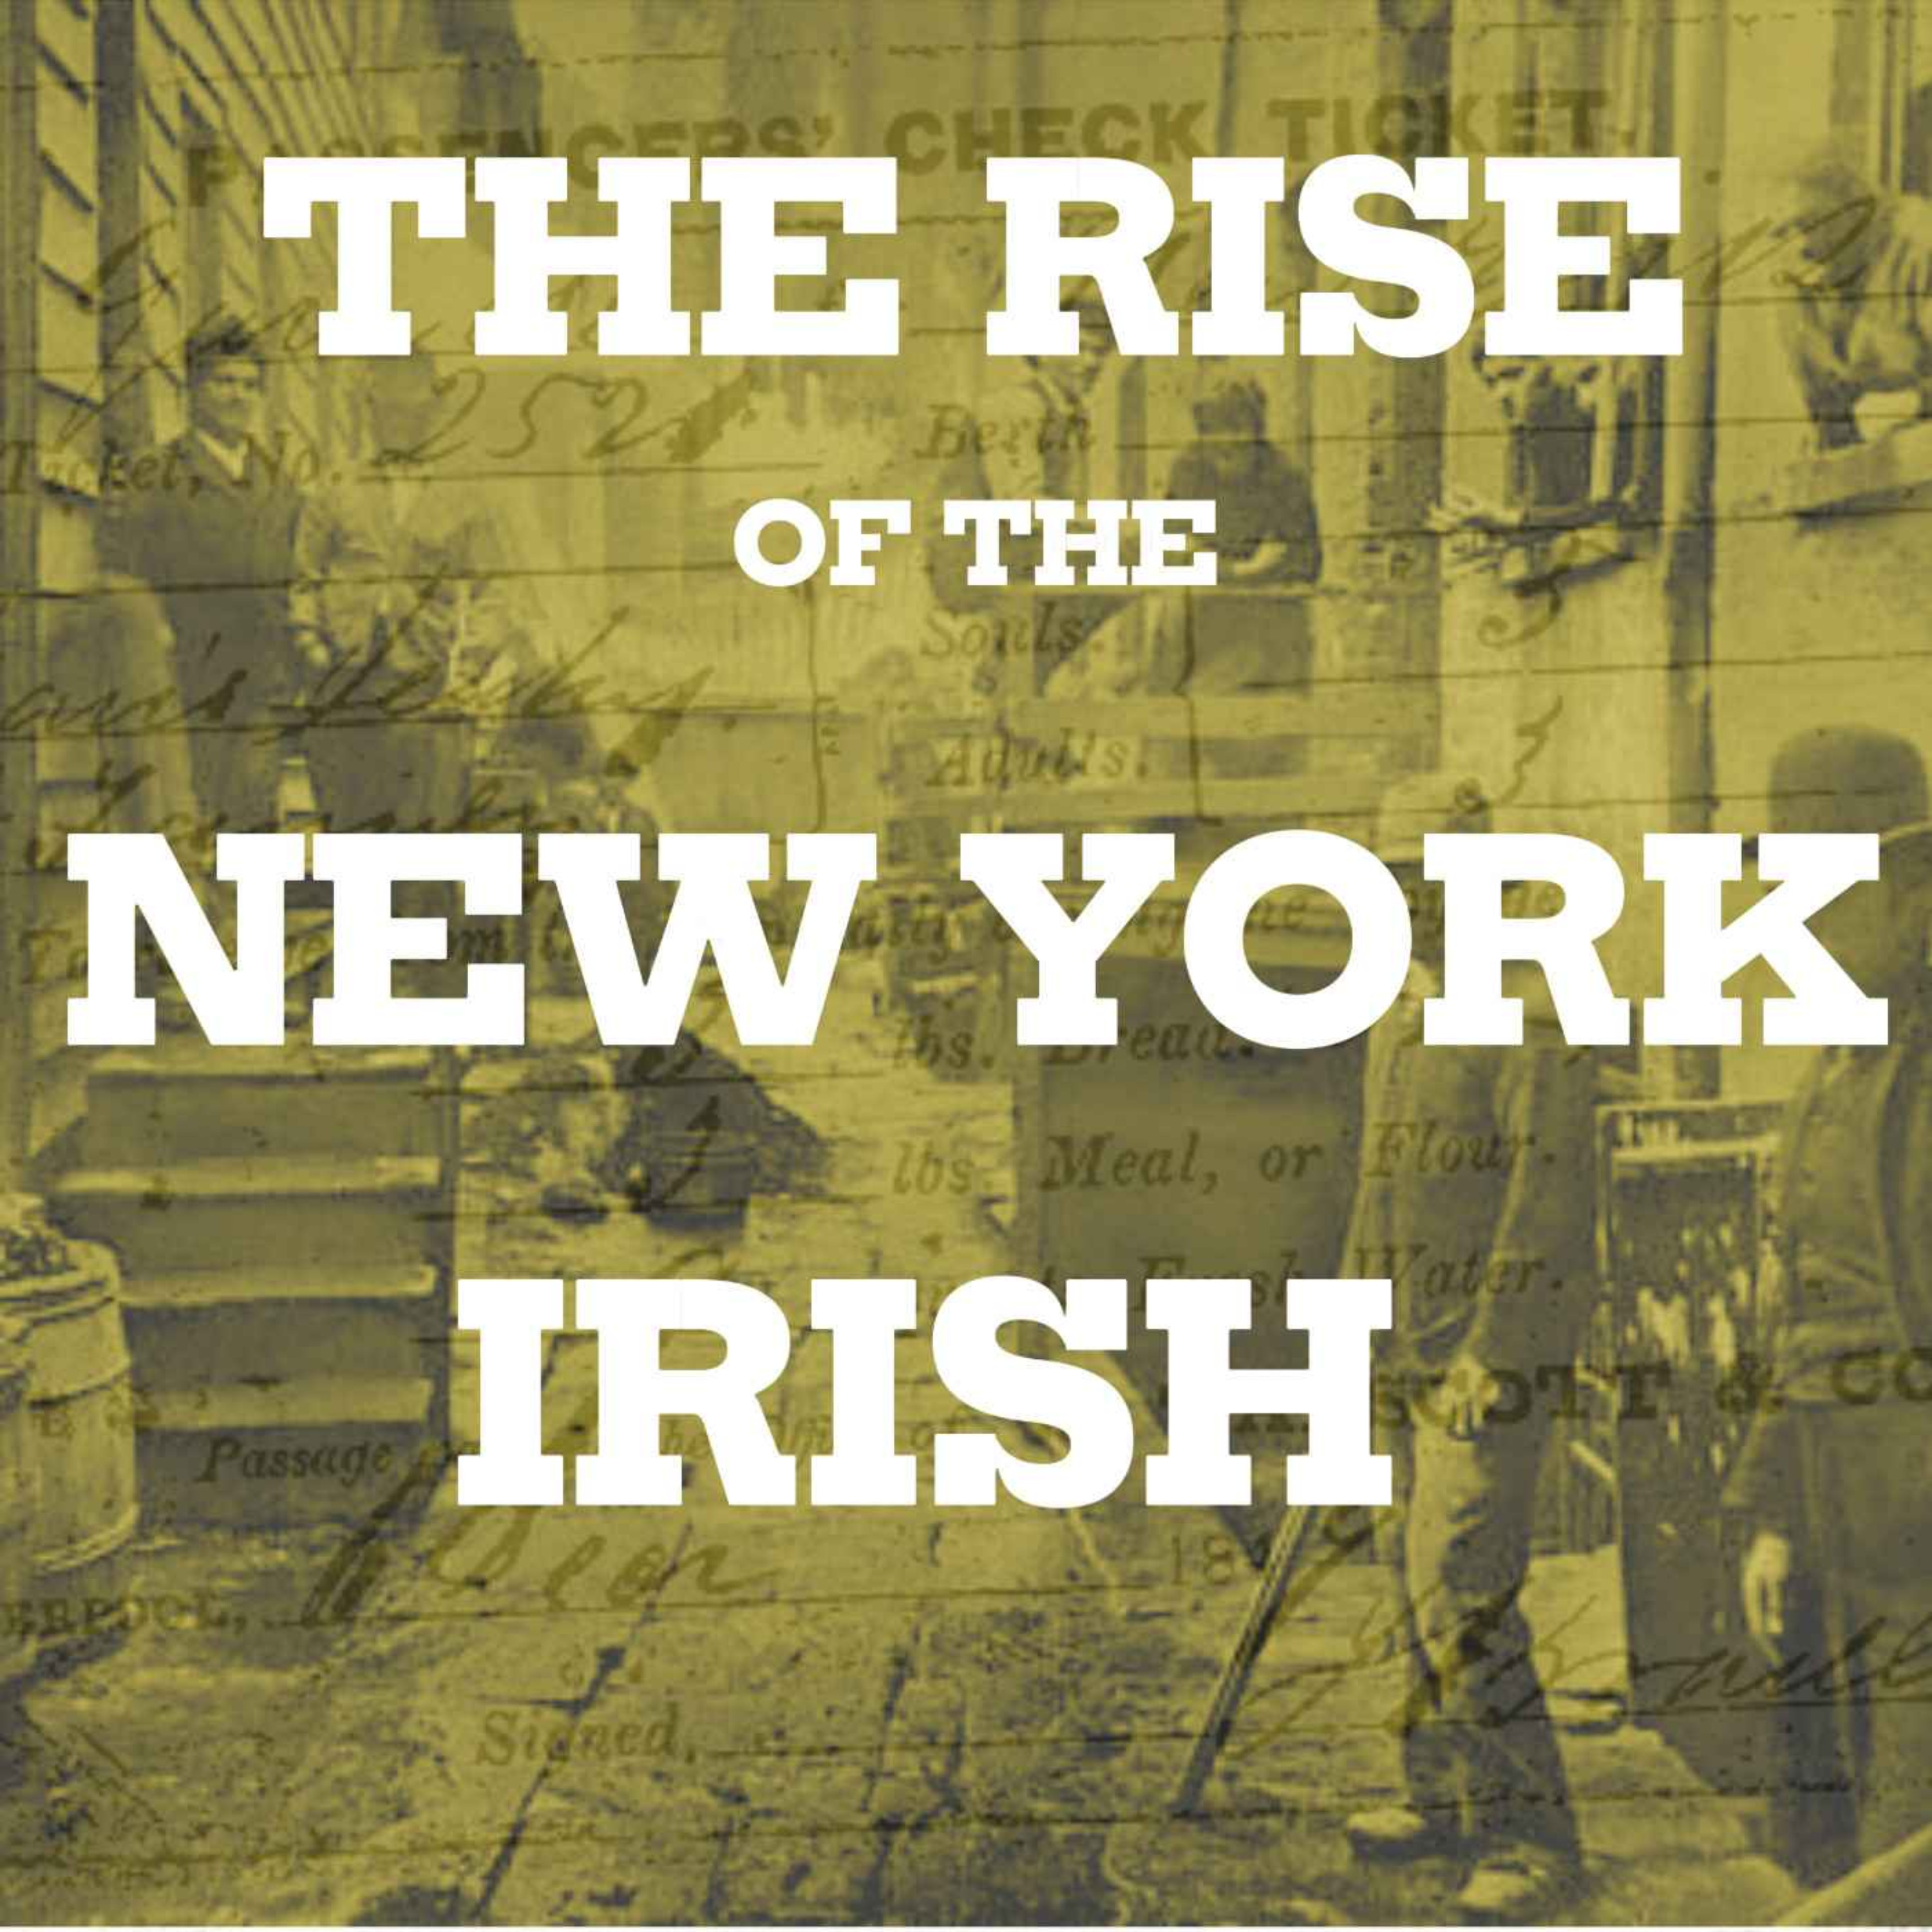 The Rise of the Irish in New York